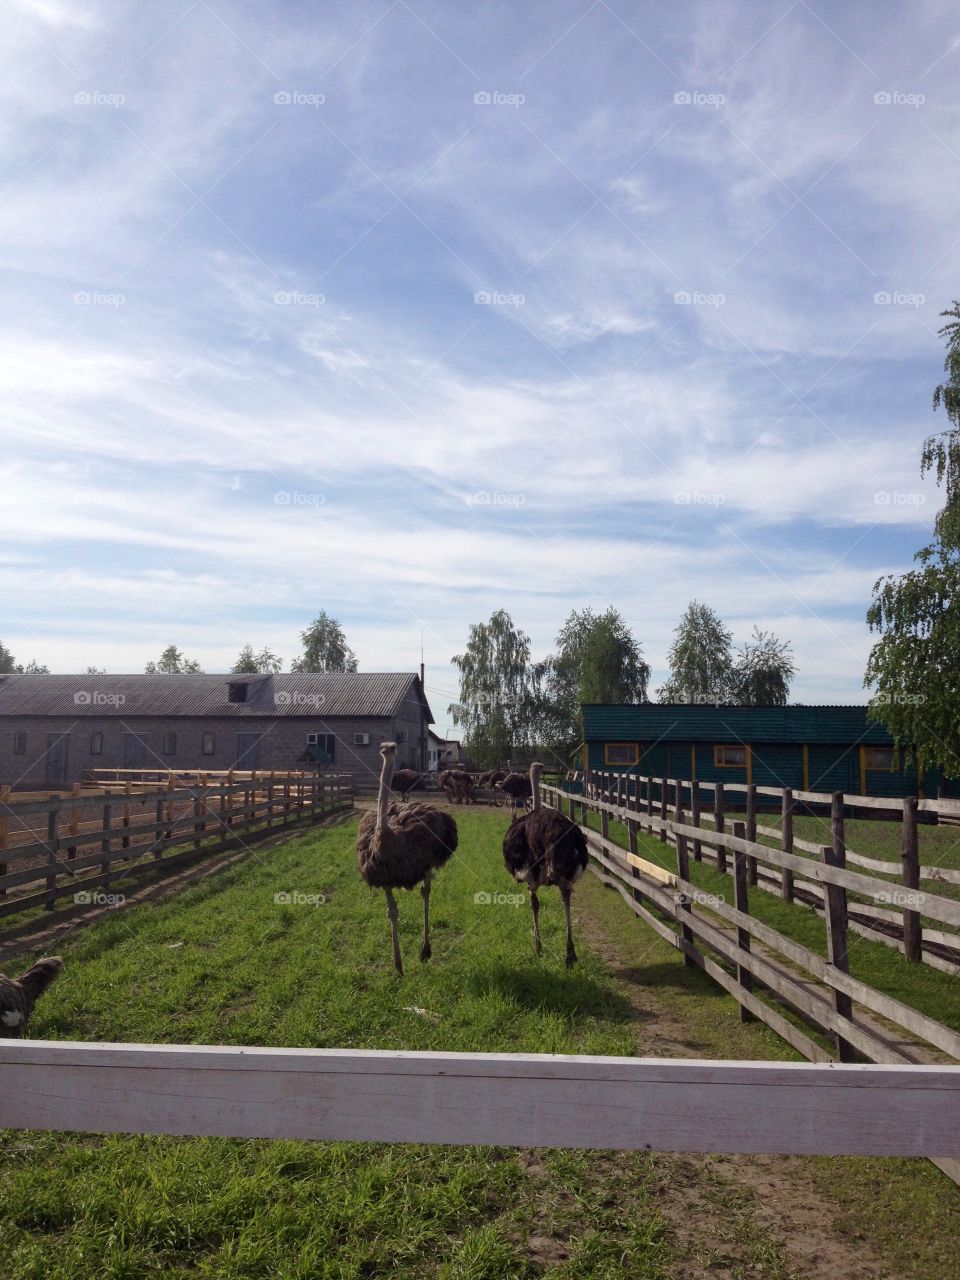 Ostrich farm